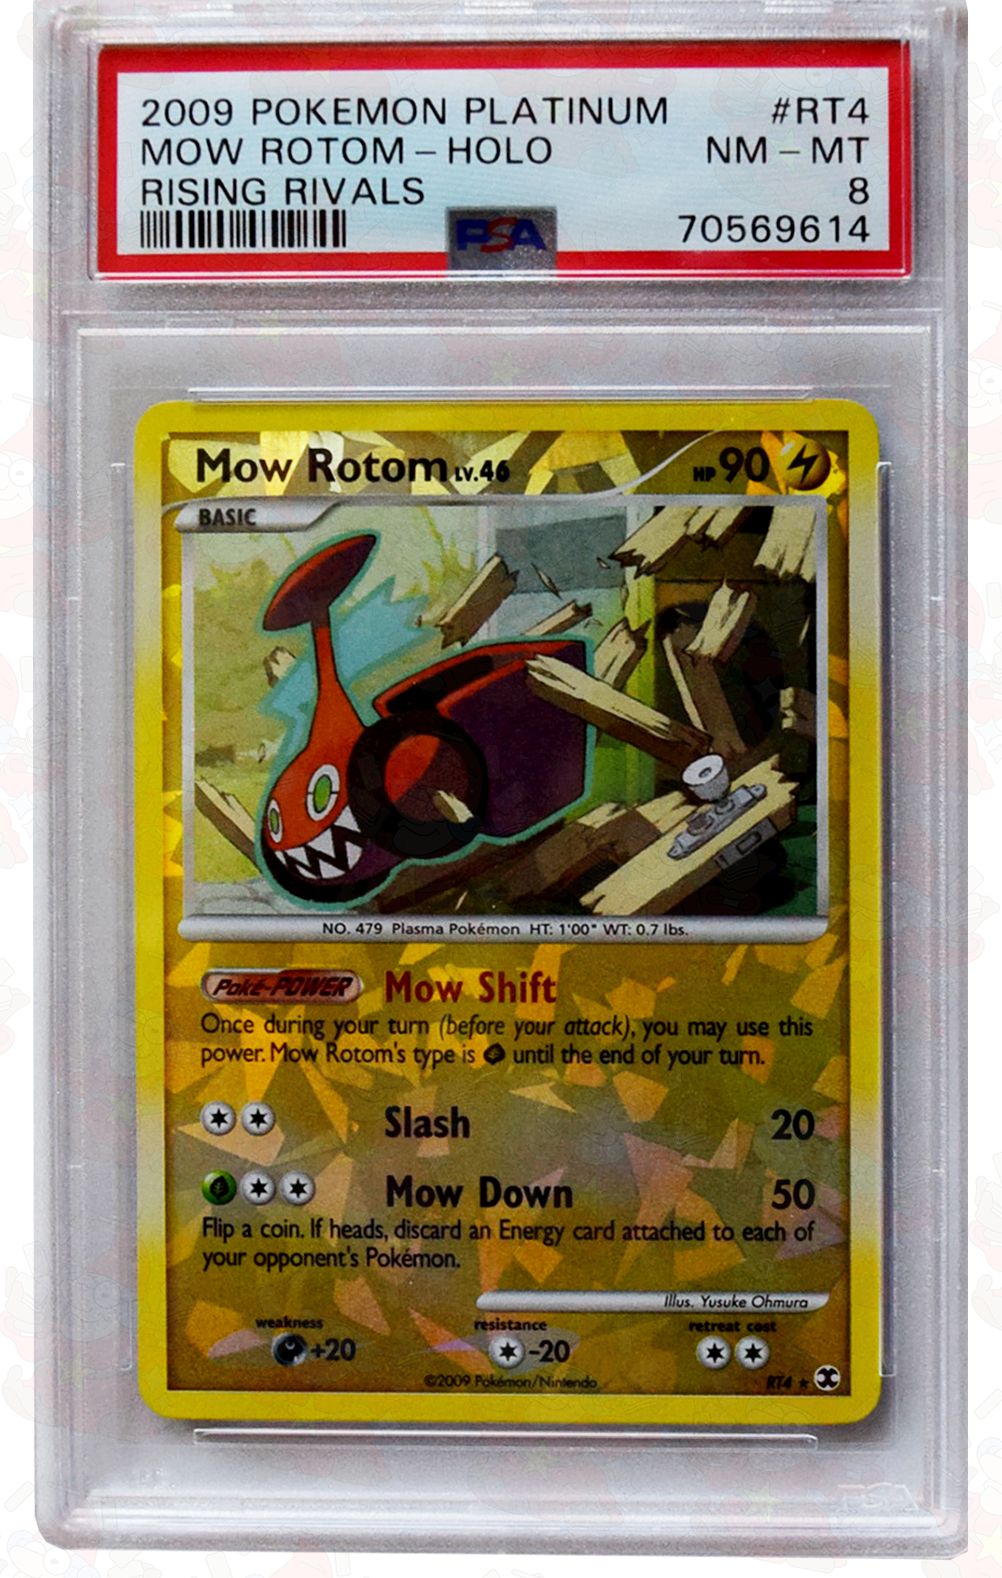 2009 Pokemon Platinum - Mow Rotom (#RT4) - Holo - Rising Rivals - PSA 8 NM - MT